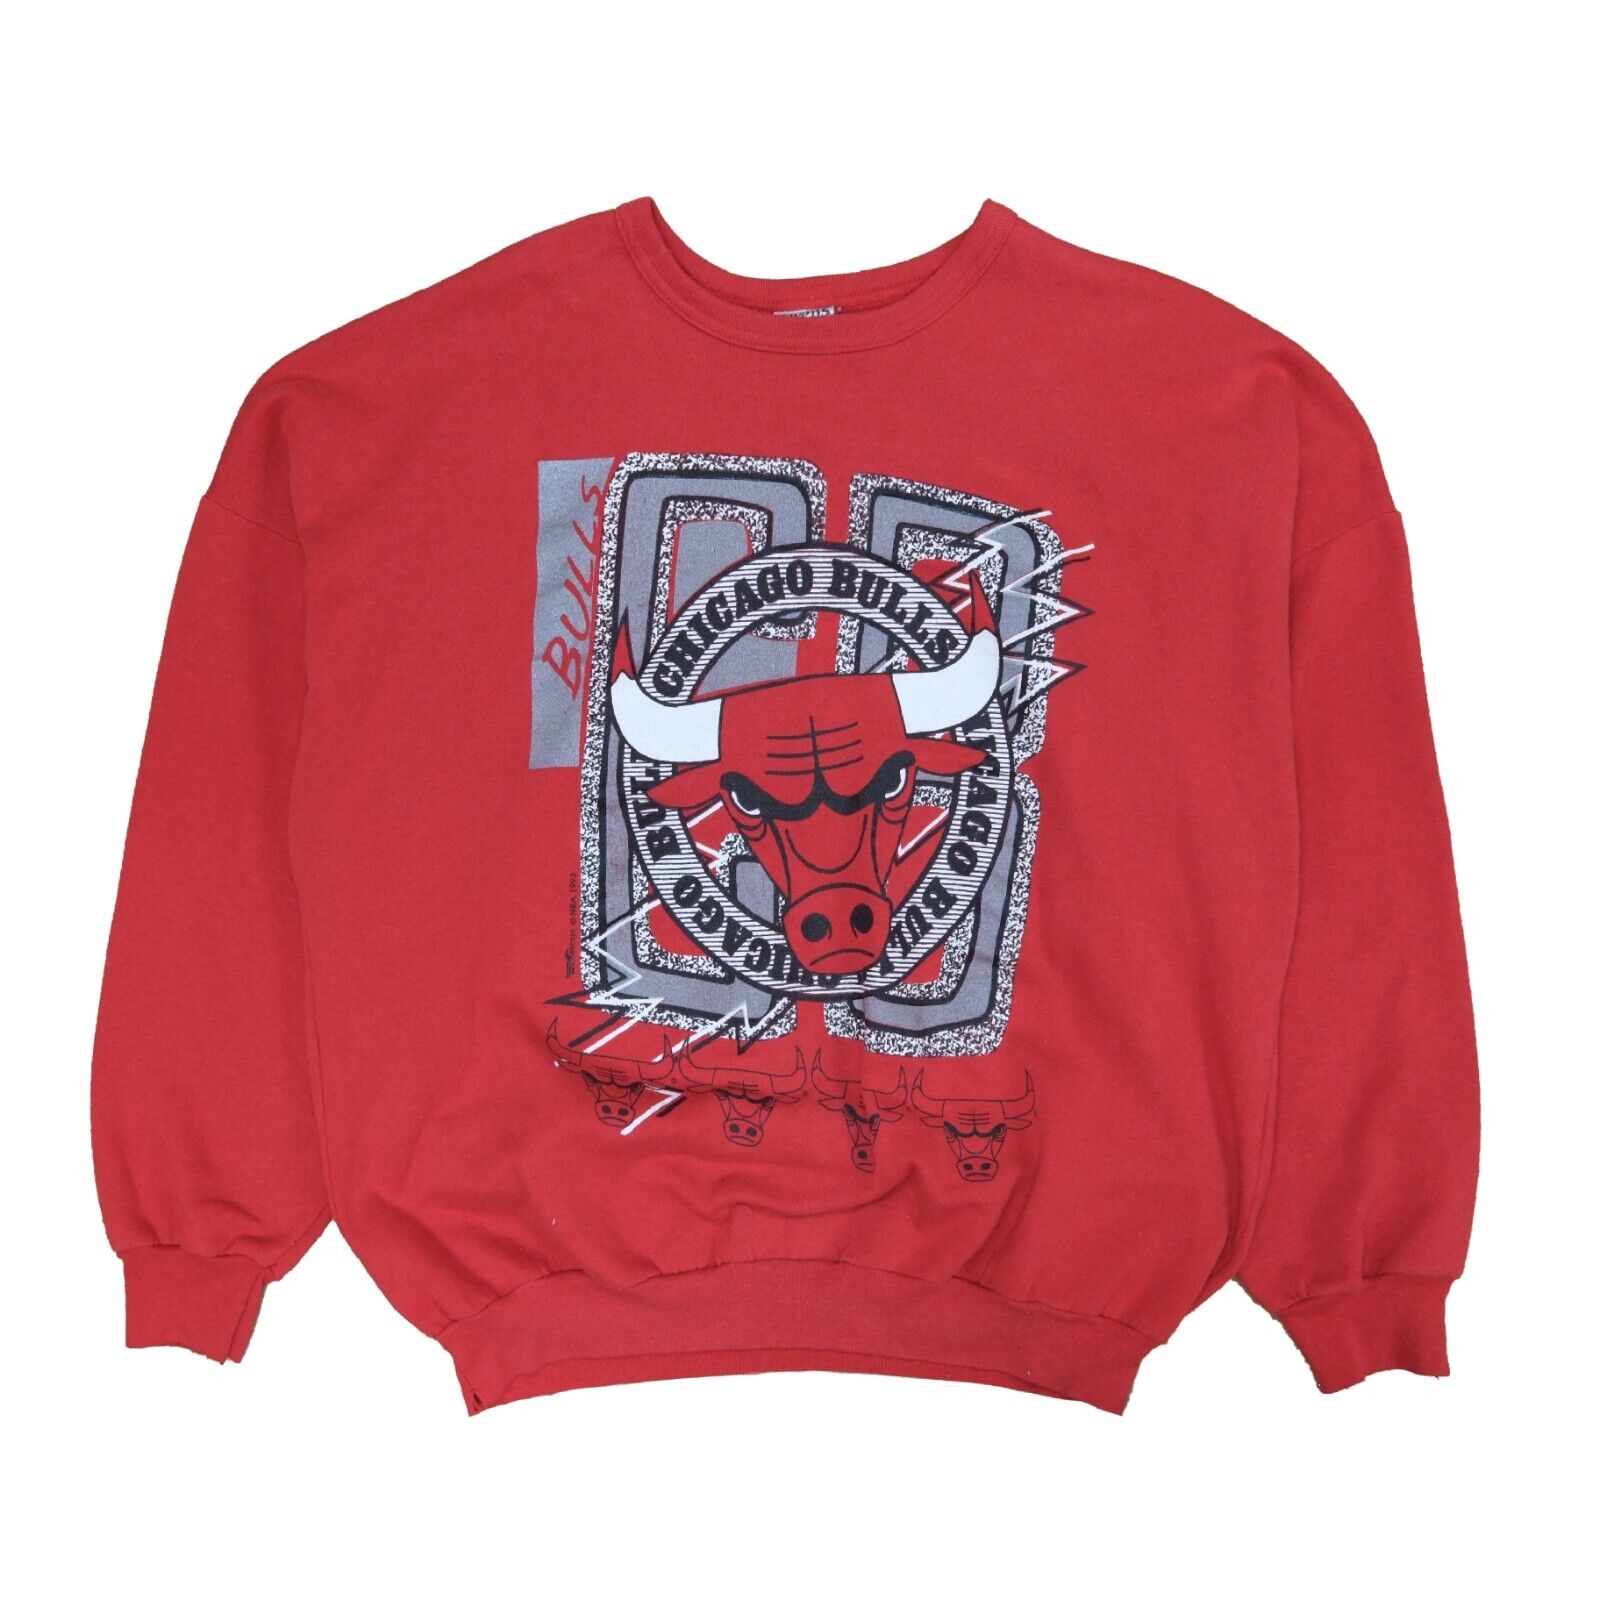 Vintage Chicago Bulls Ravens Sweatshirt Crewneck Size XL Red